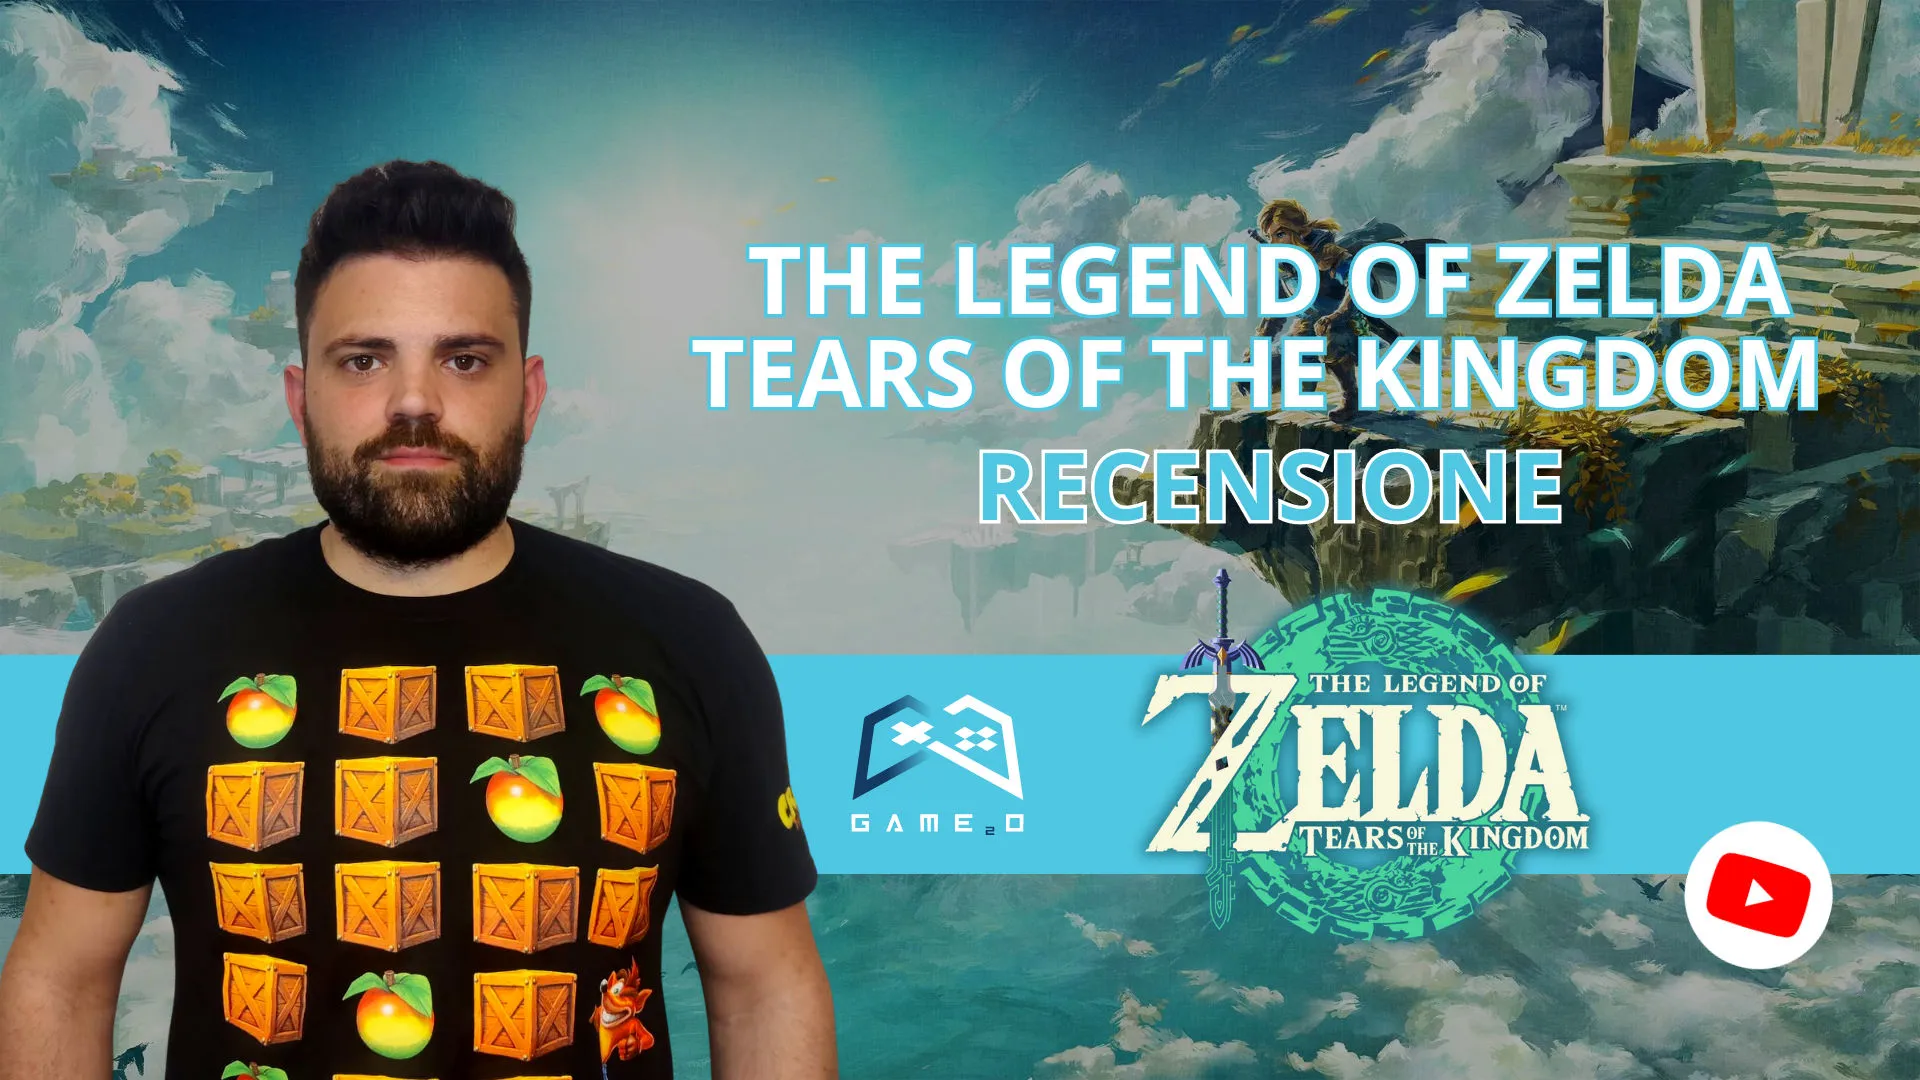 zelda tears of the kingdom recensione